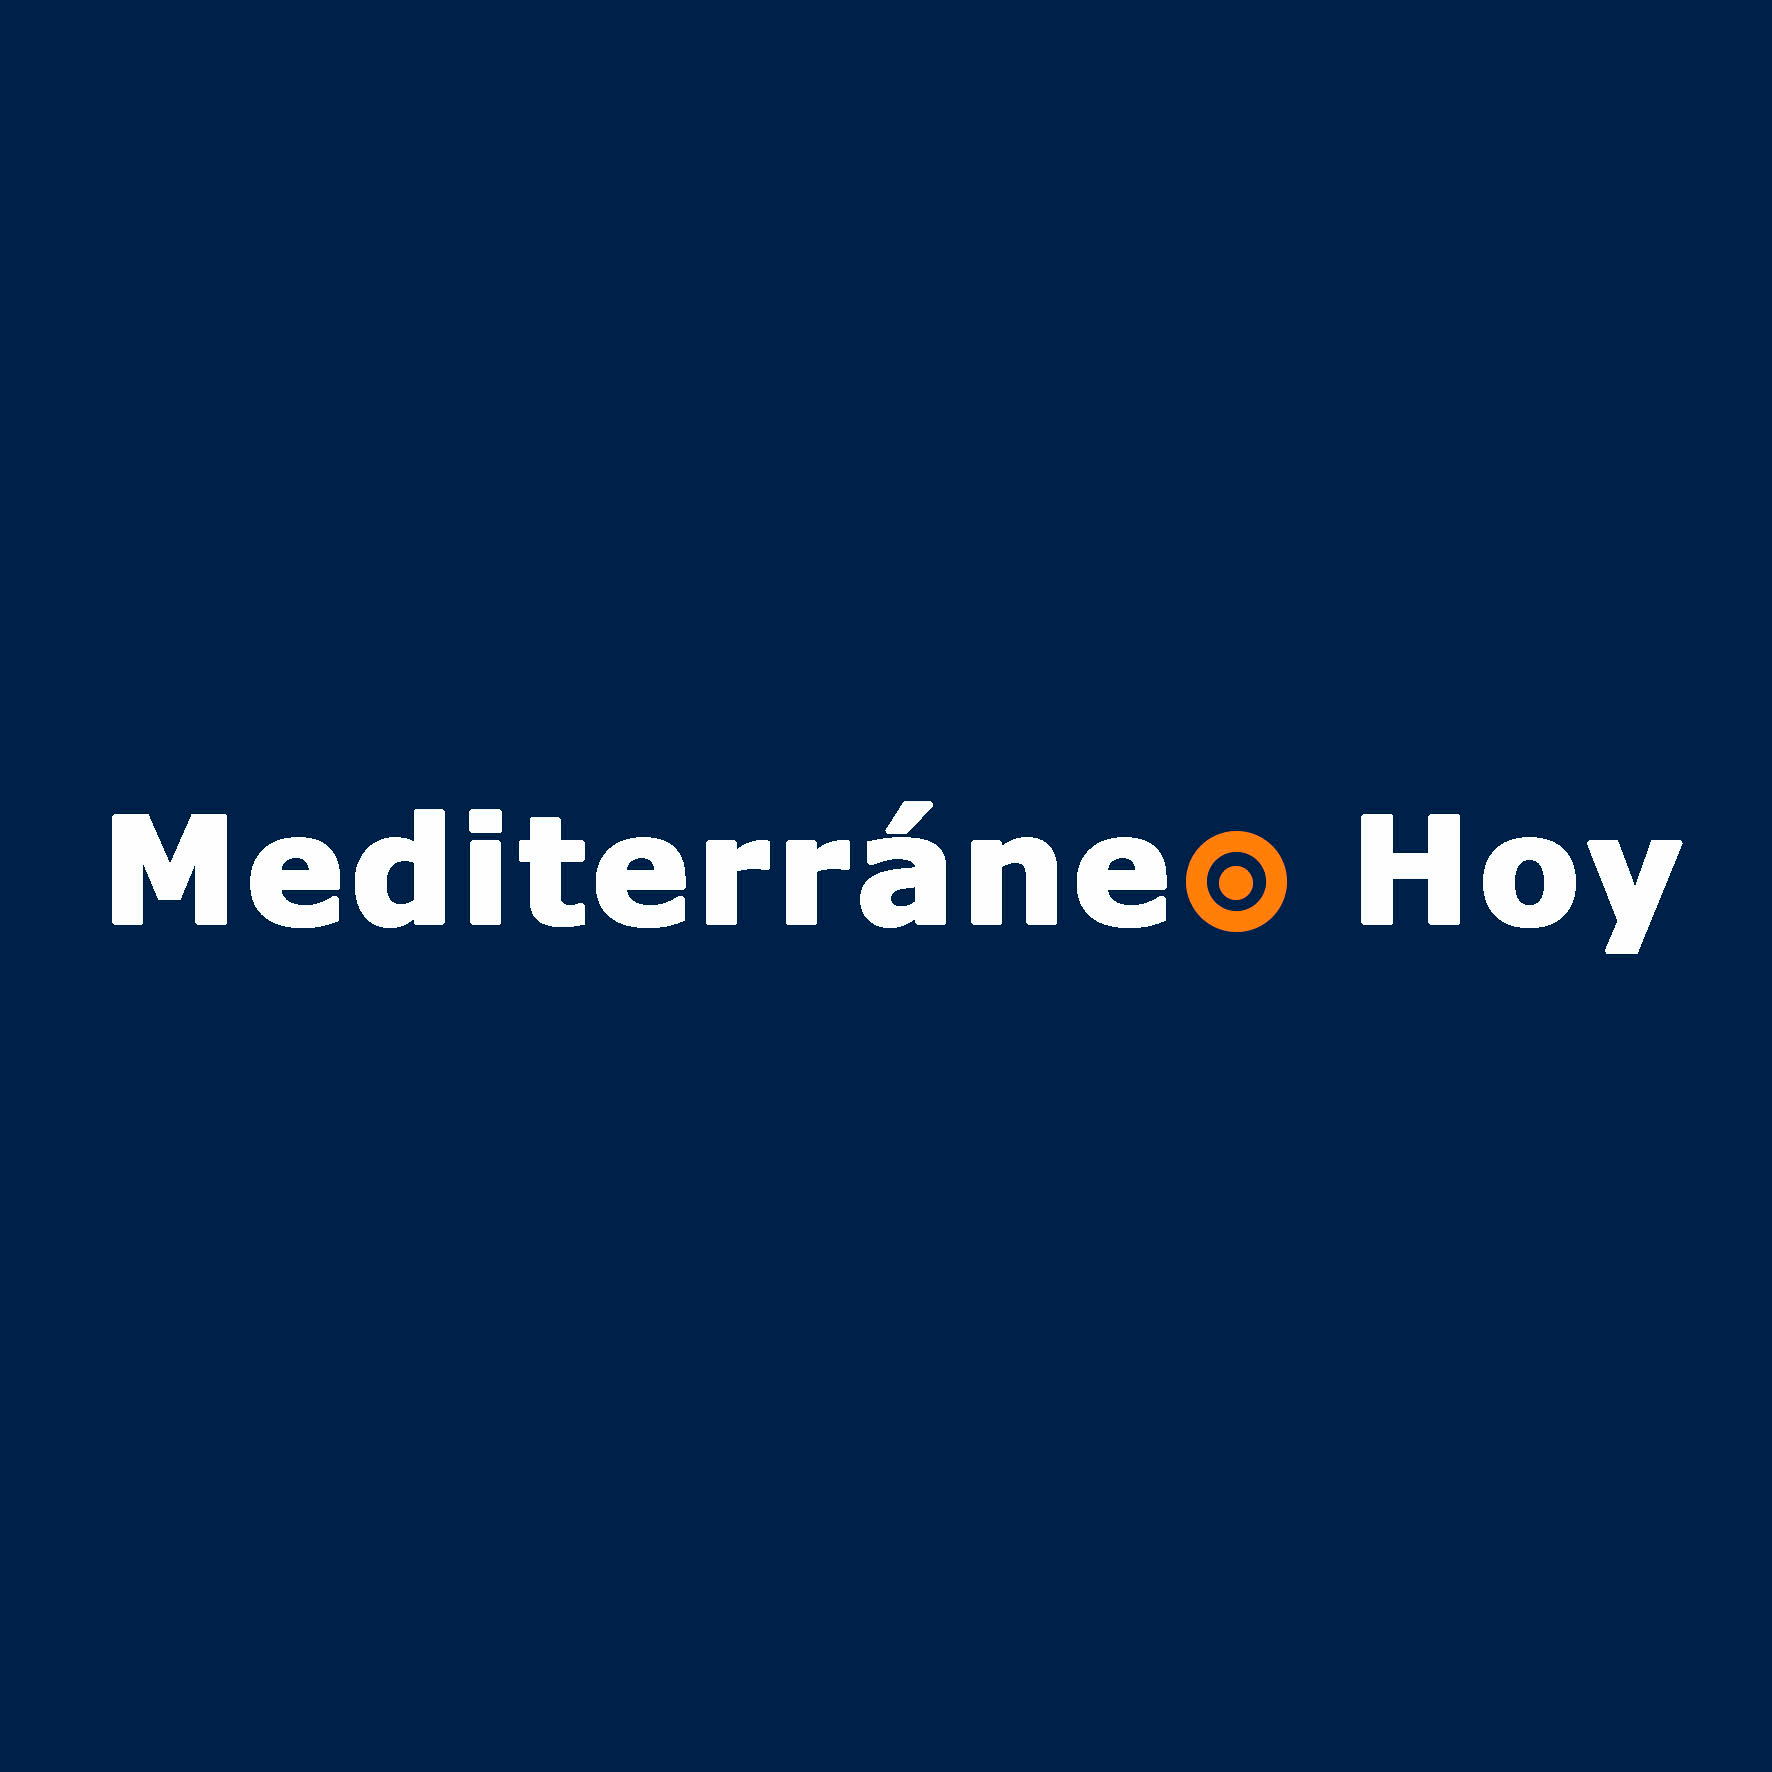 MEDITERRANEO HOY